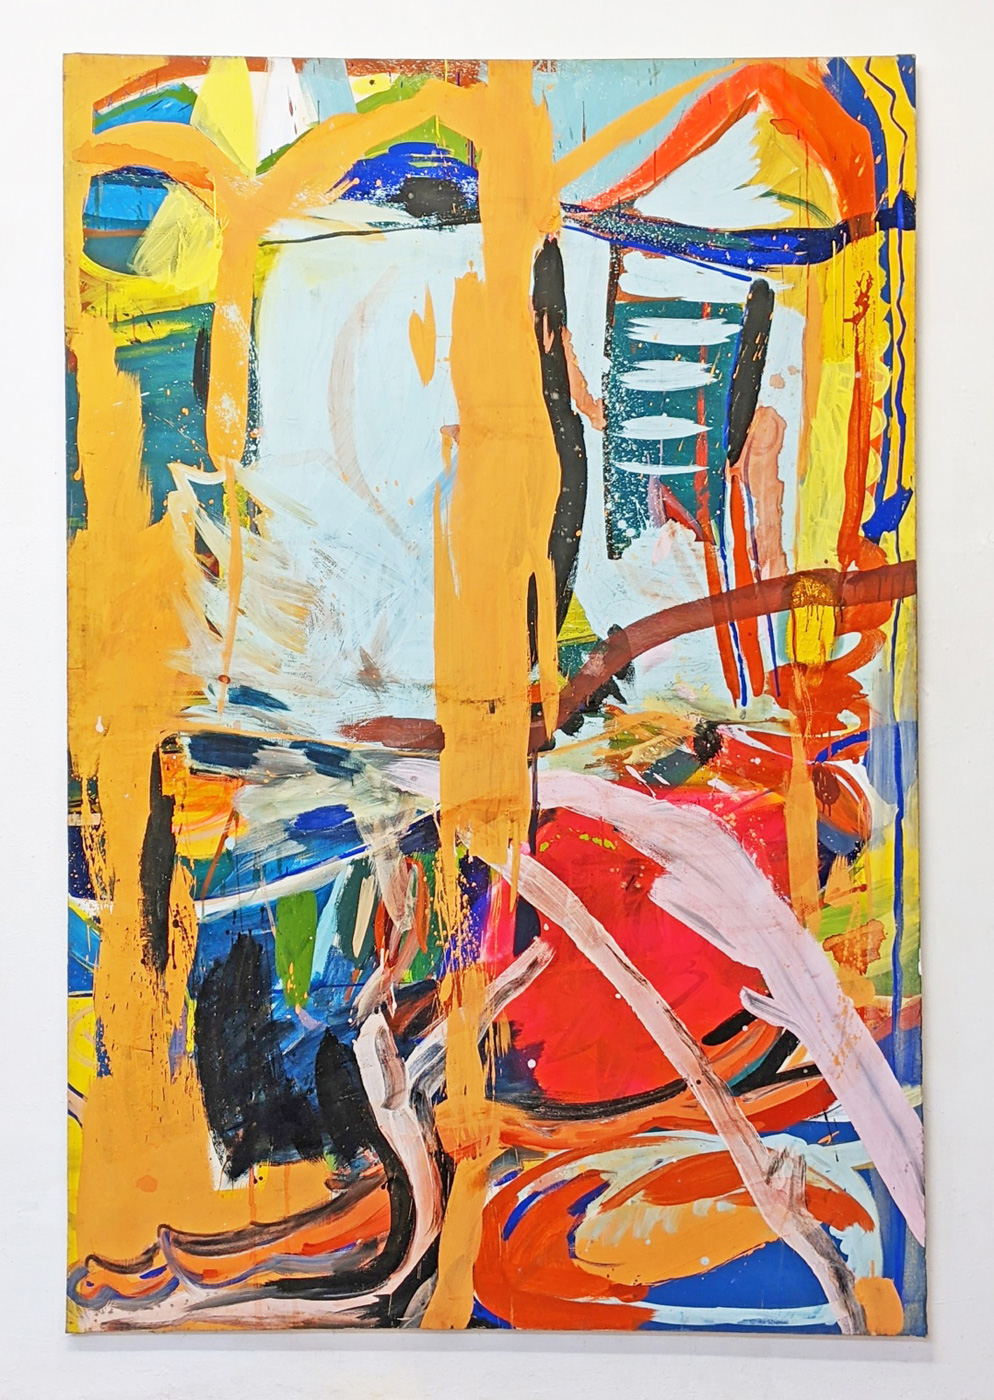 "Fallen", 248 x 167 cm, Acrylfarbe, Nessel, 1985